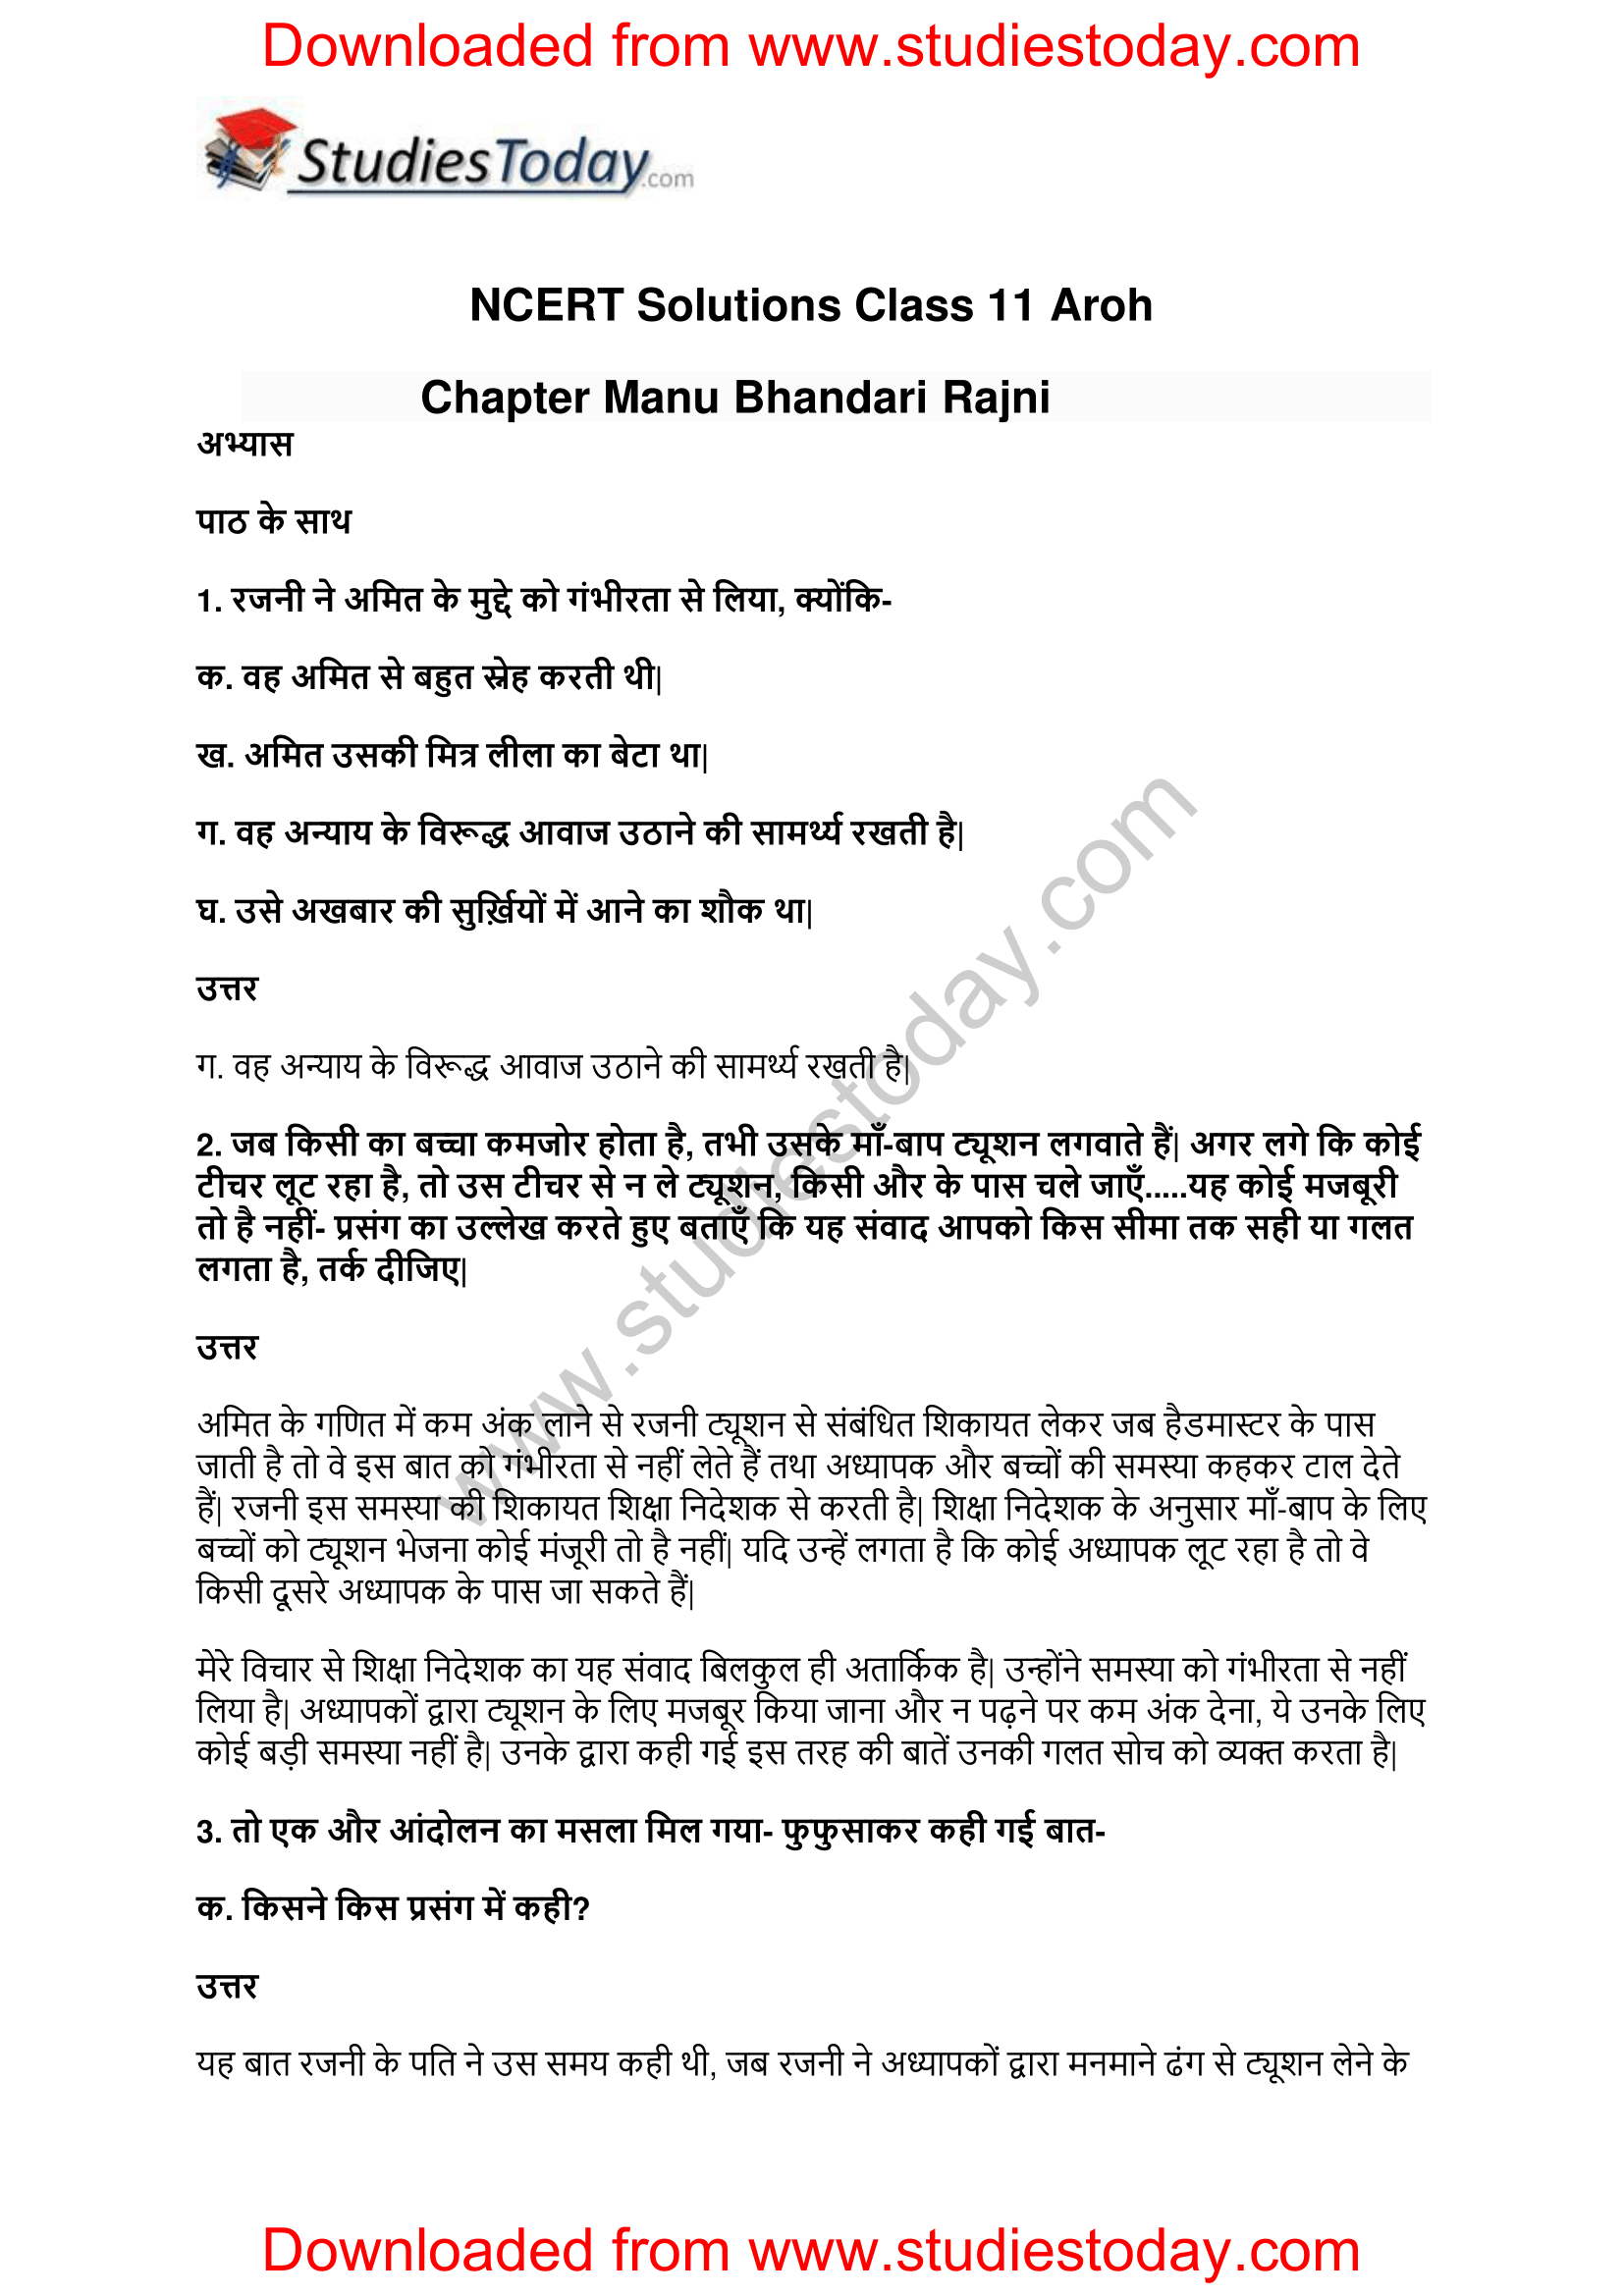 NCERT-Solutions-Class-11-Hindi-Aroh-Manu-Bhandari-1